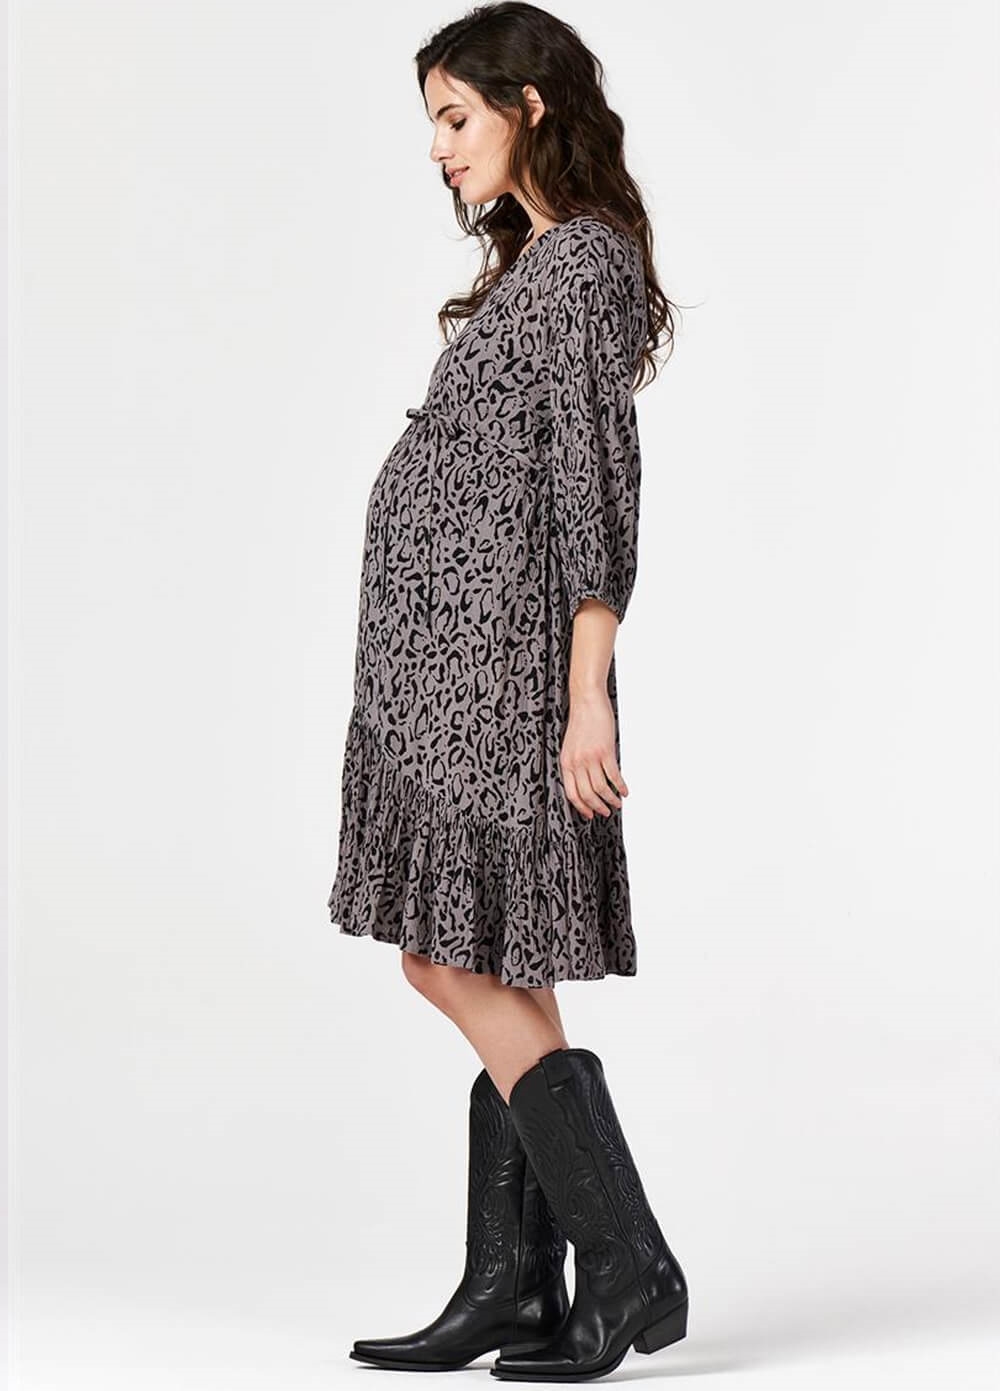 Supermom - Leopard Print Maternity Dress | Queen Bee